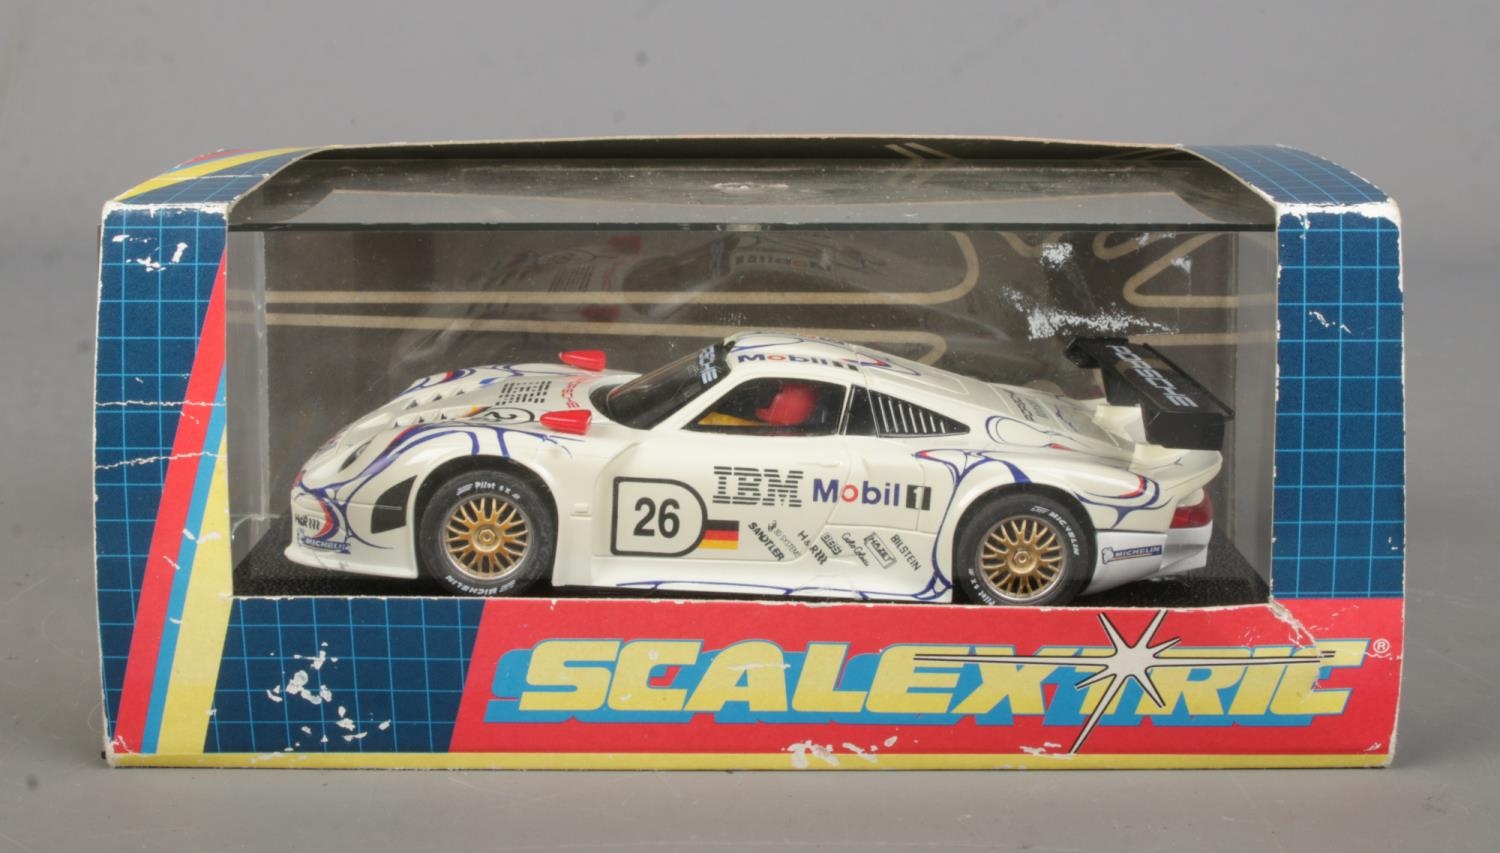 A boxed Hornby Scalextric Porsche 911 race car.